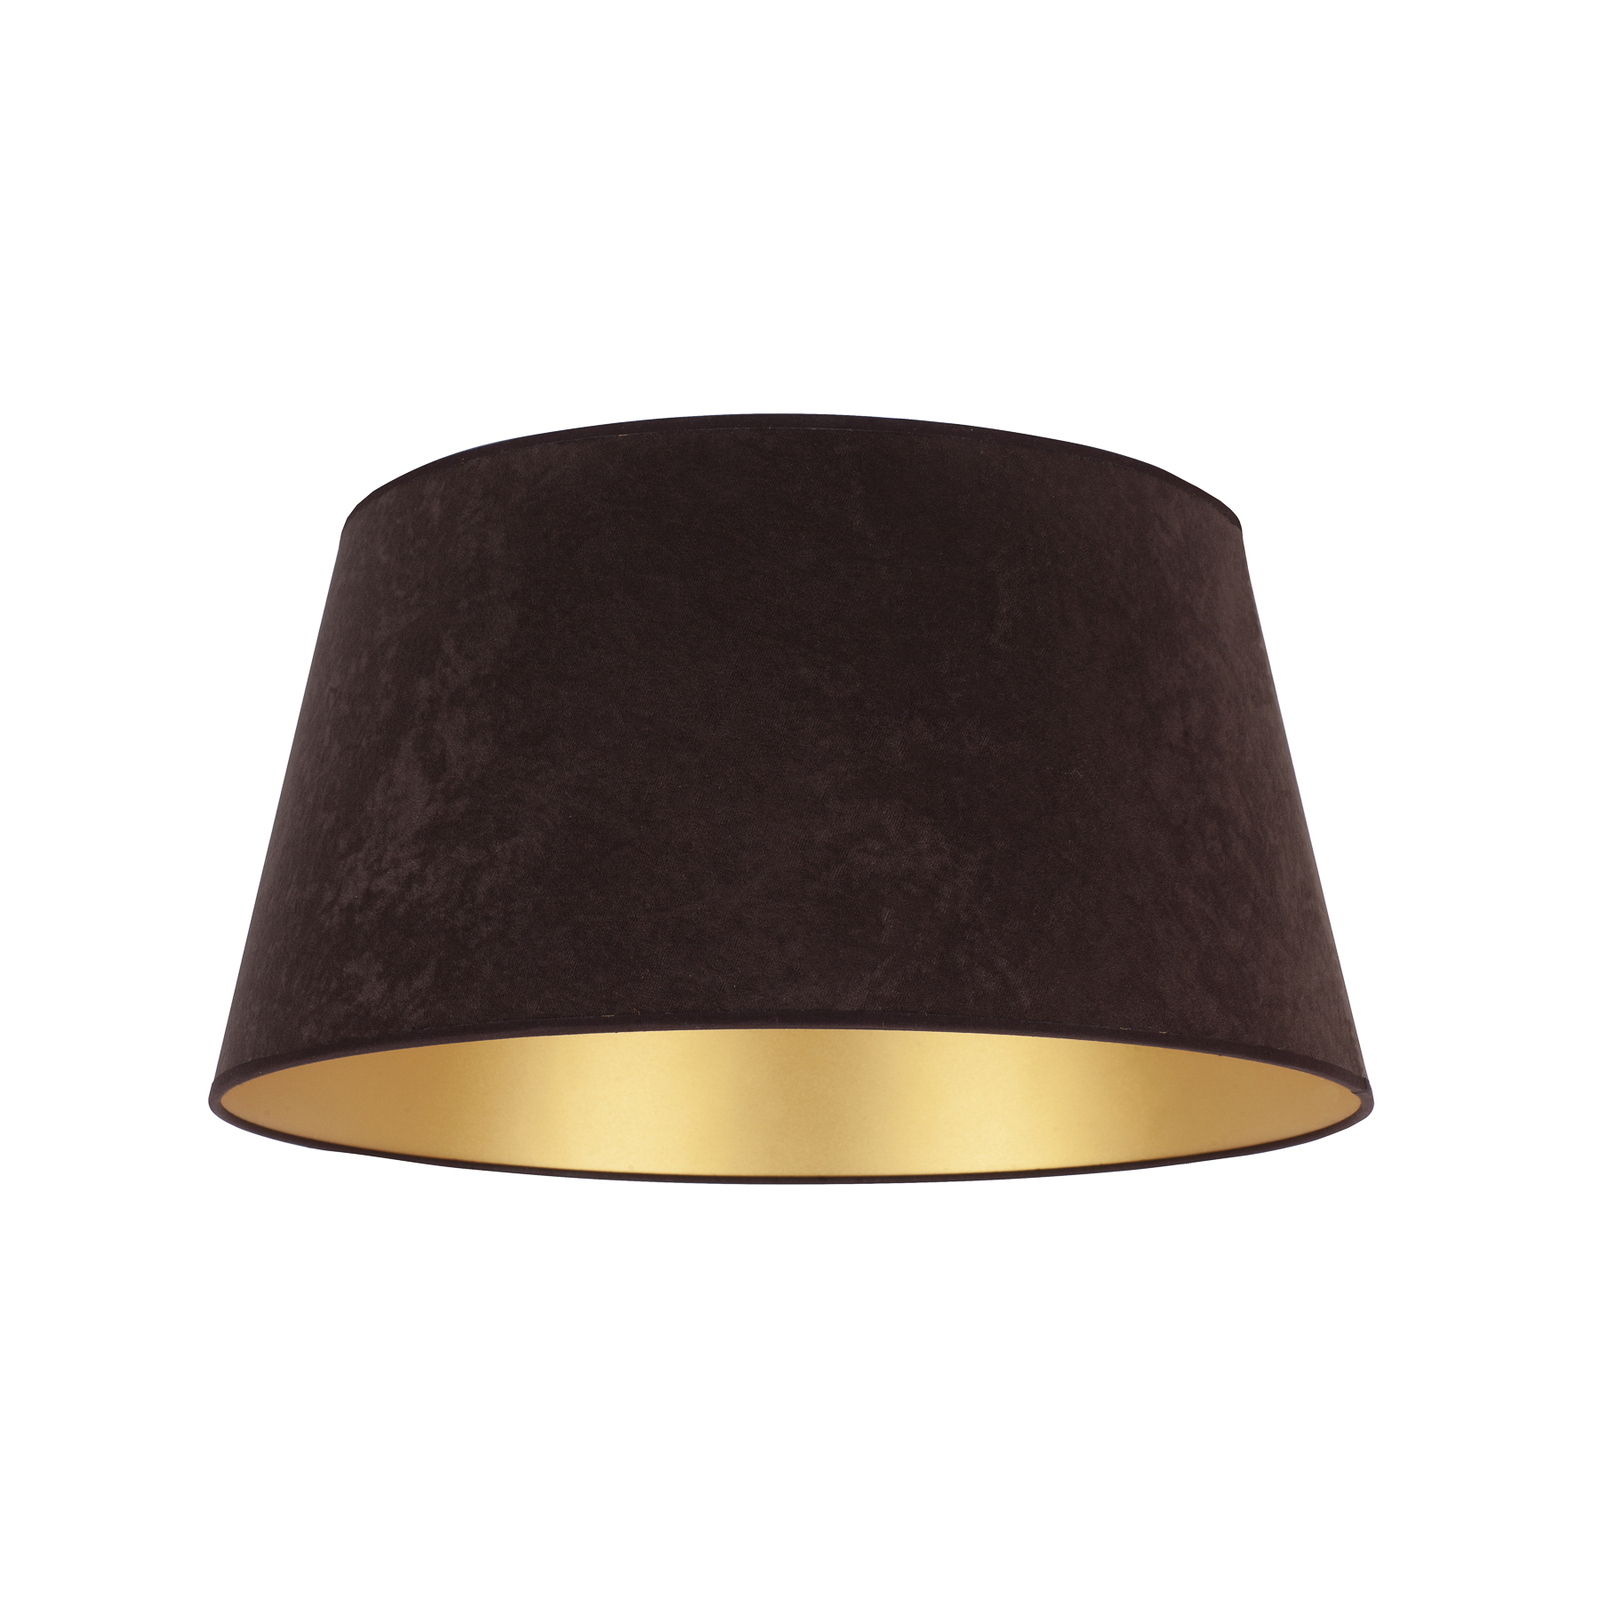 Lampenschirm Cone Höhe 25,5 cm, braun/gold